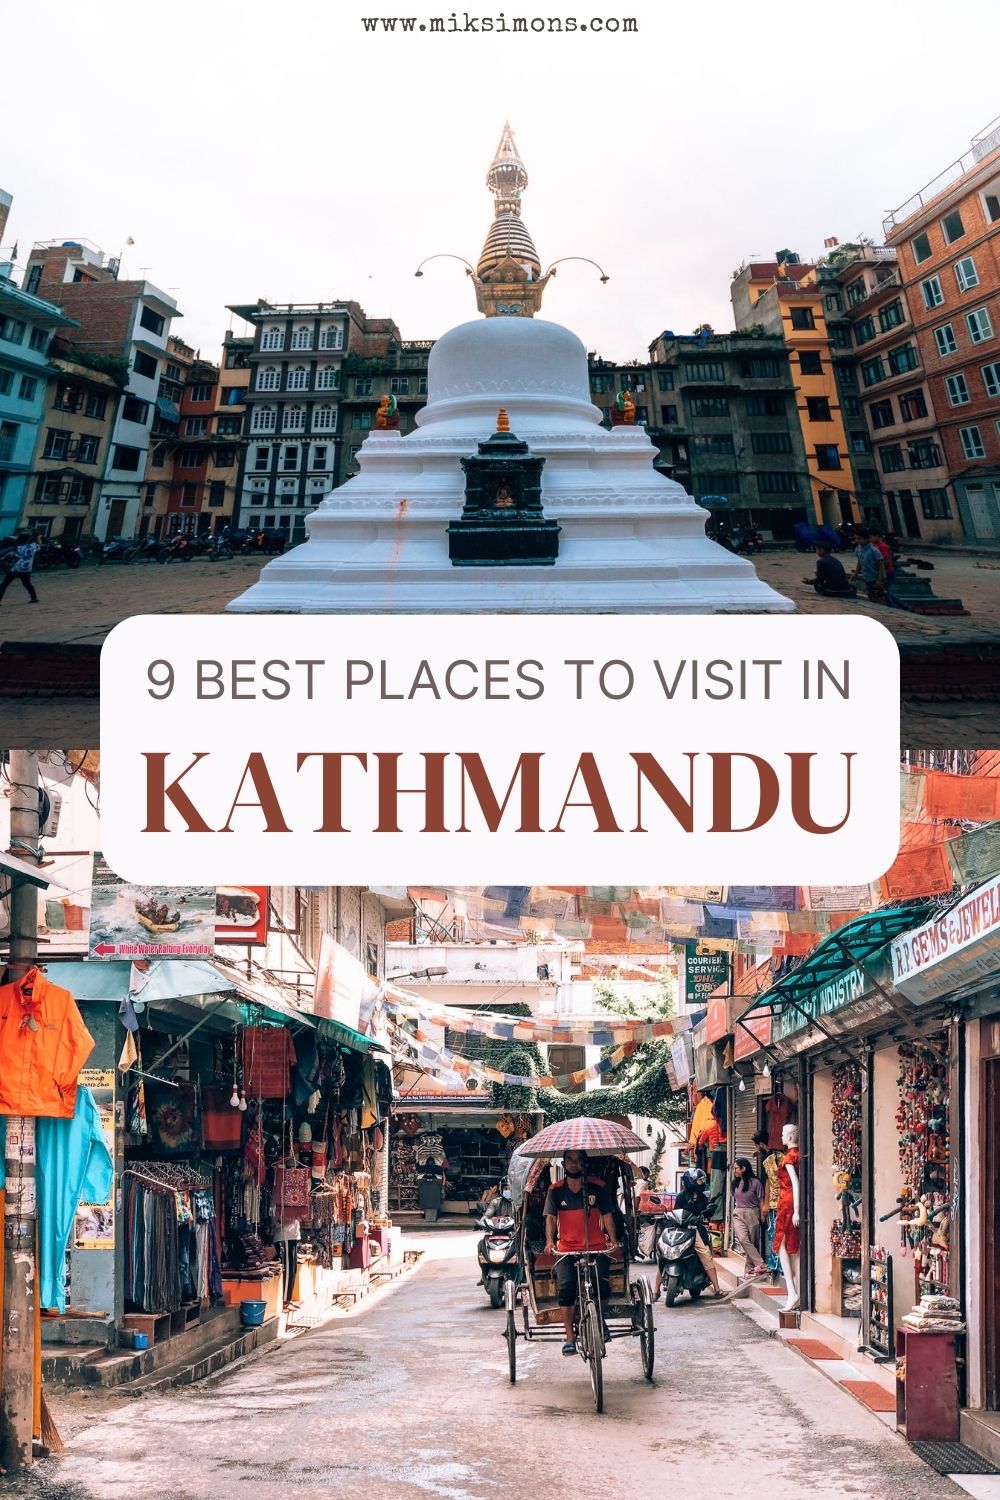 9 Best places to visit in Kathmandu1